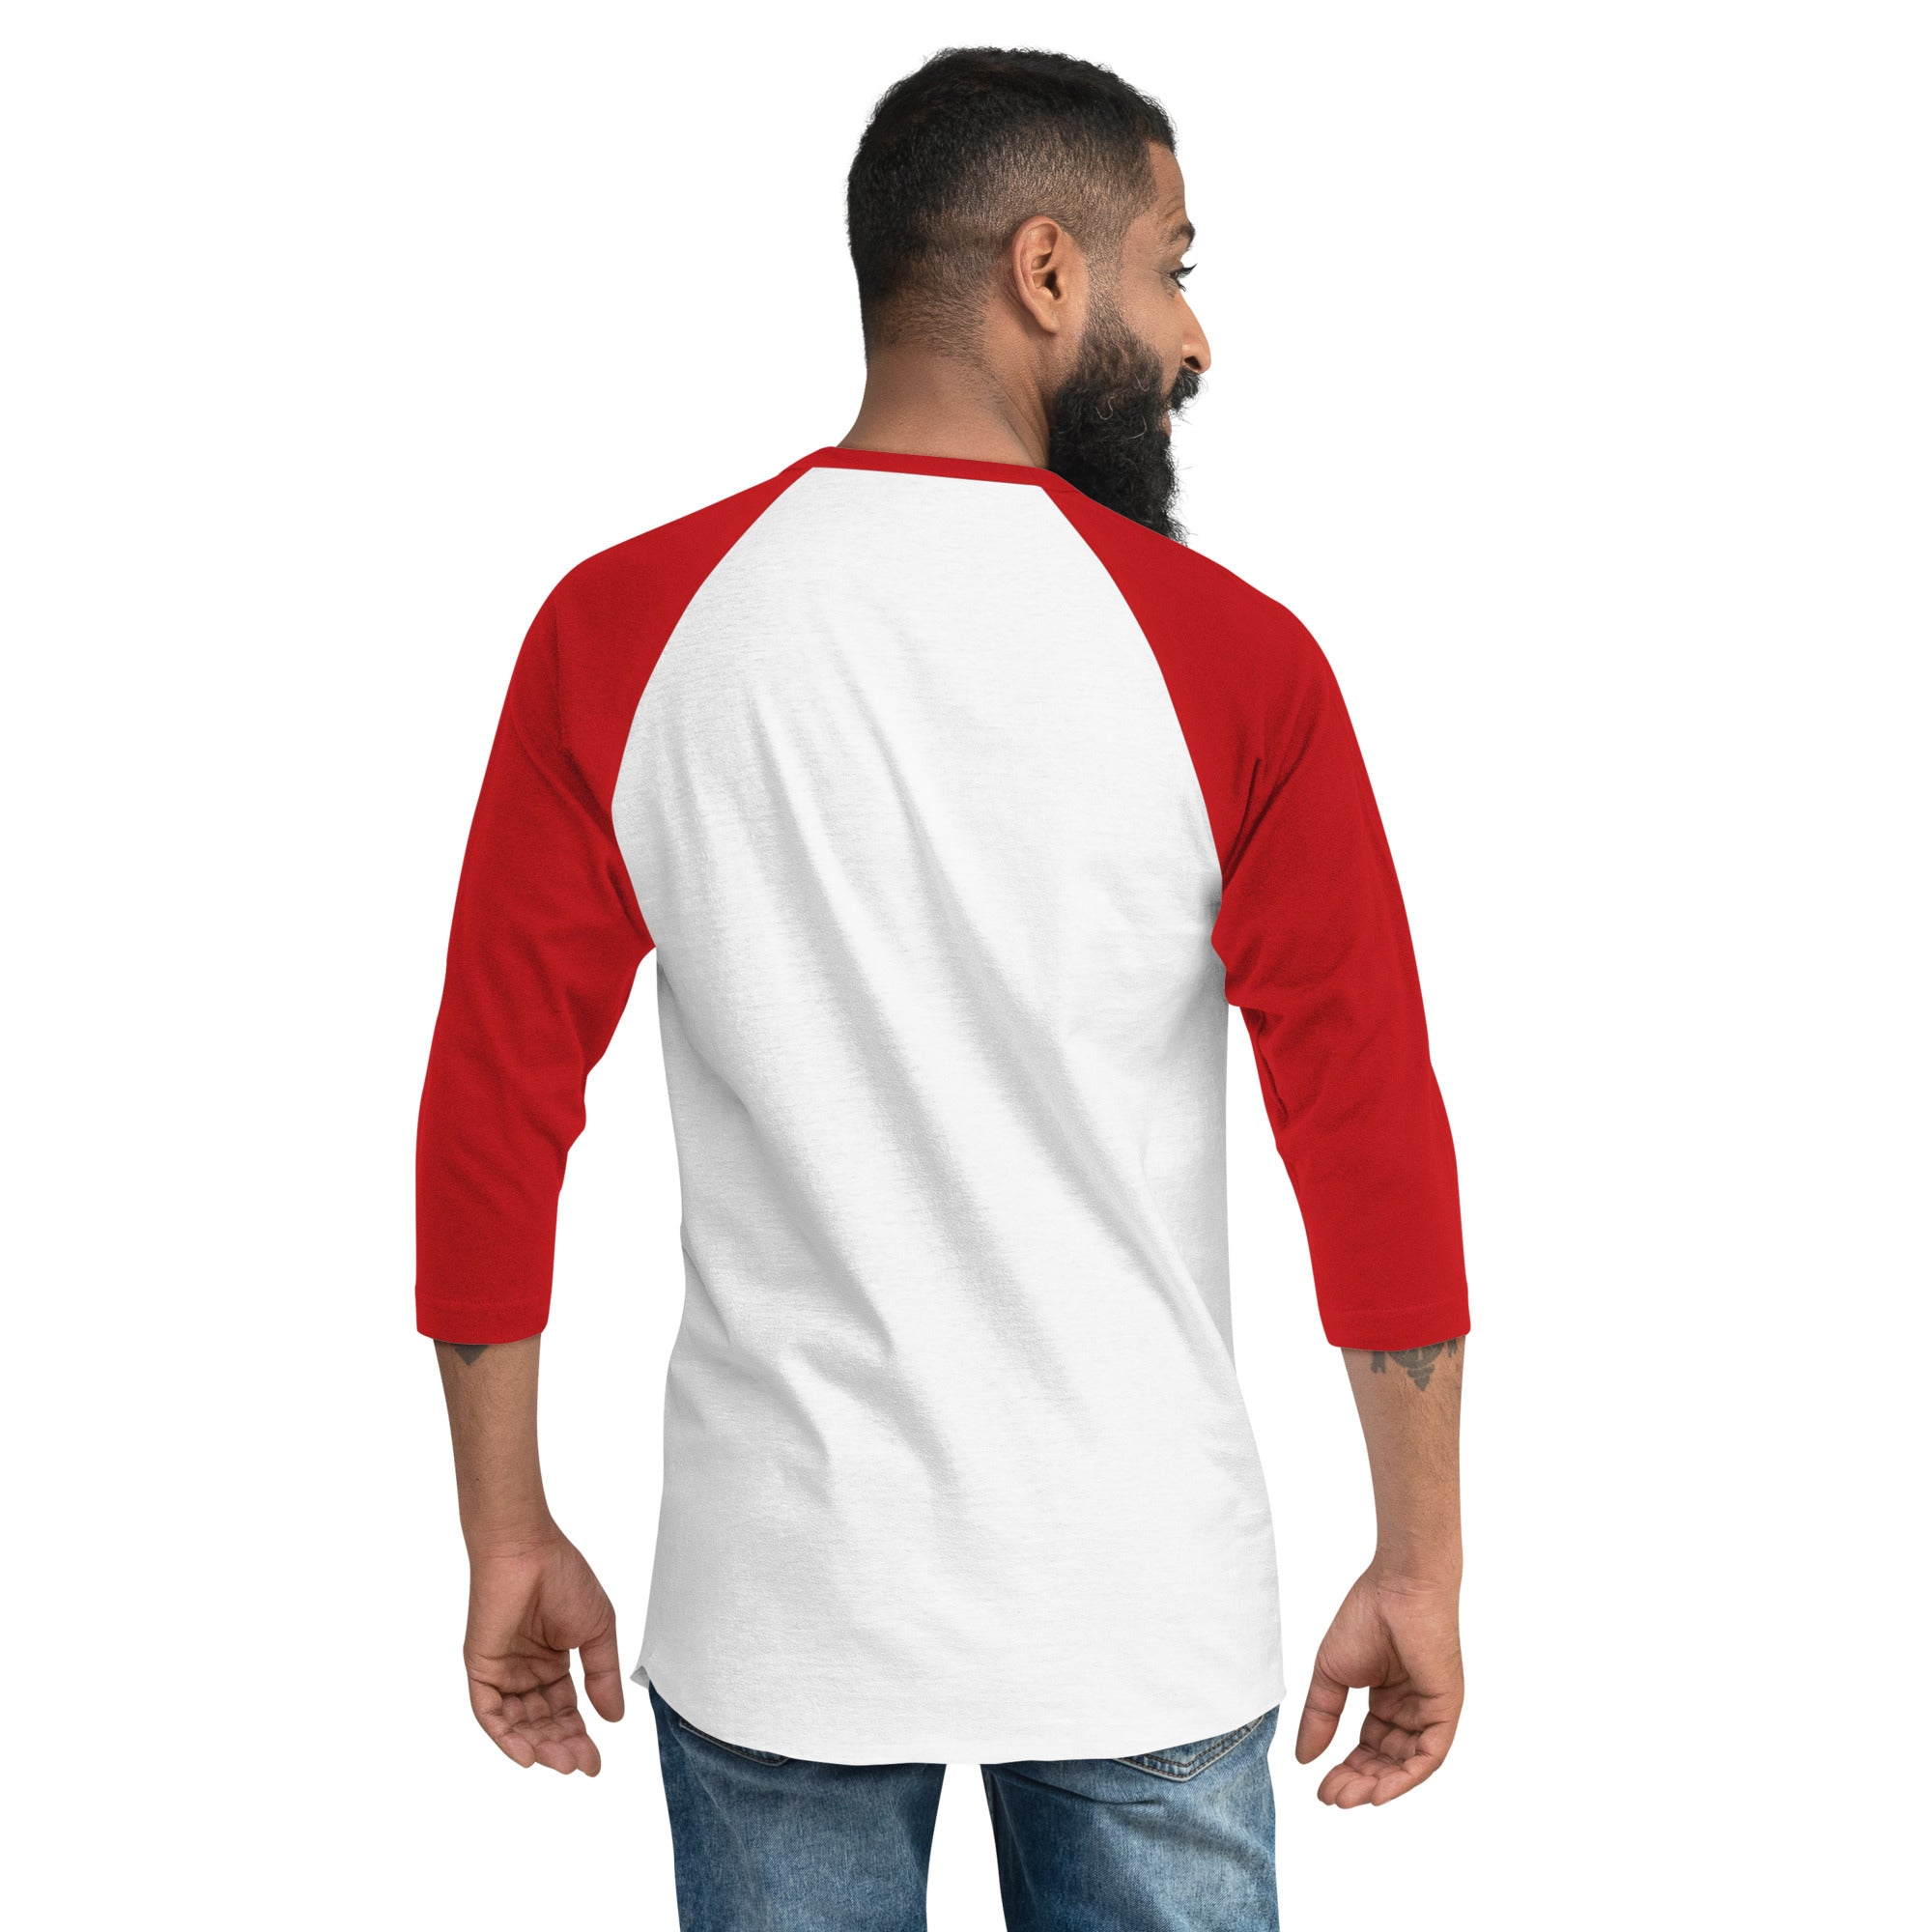 Logo - B/R - R/W 3/4 sleeve raglan shirt